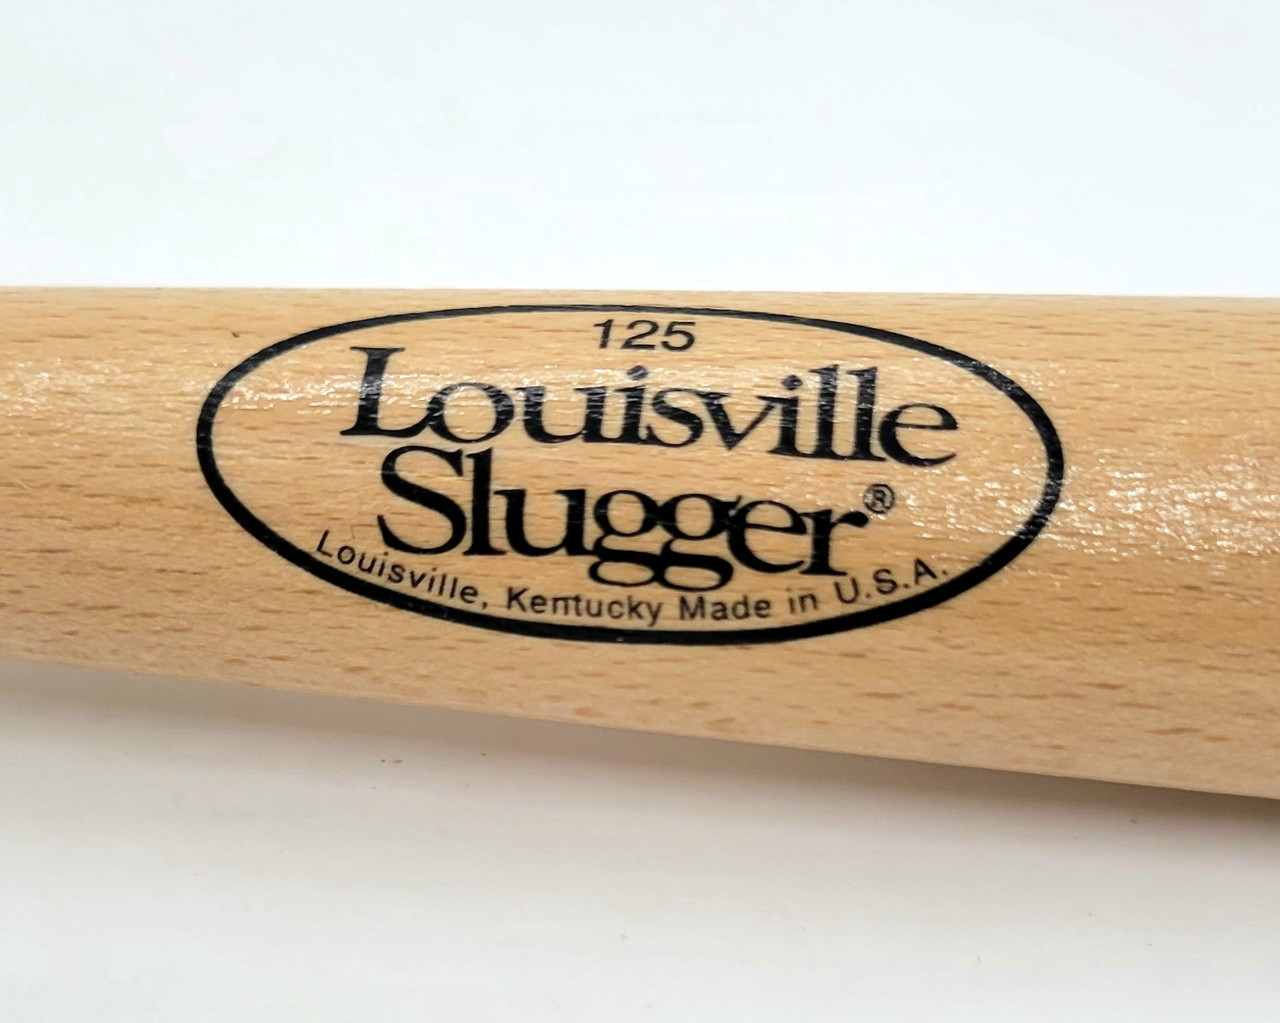 Louisville Slugger Factory Mini Baseball Bat Tour Souvenir Toy MLB